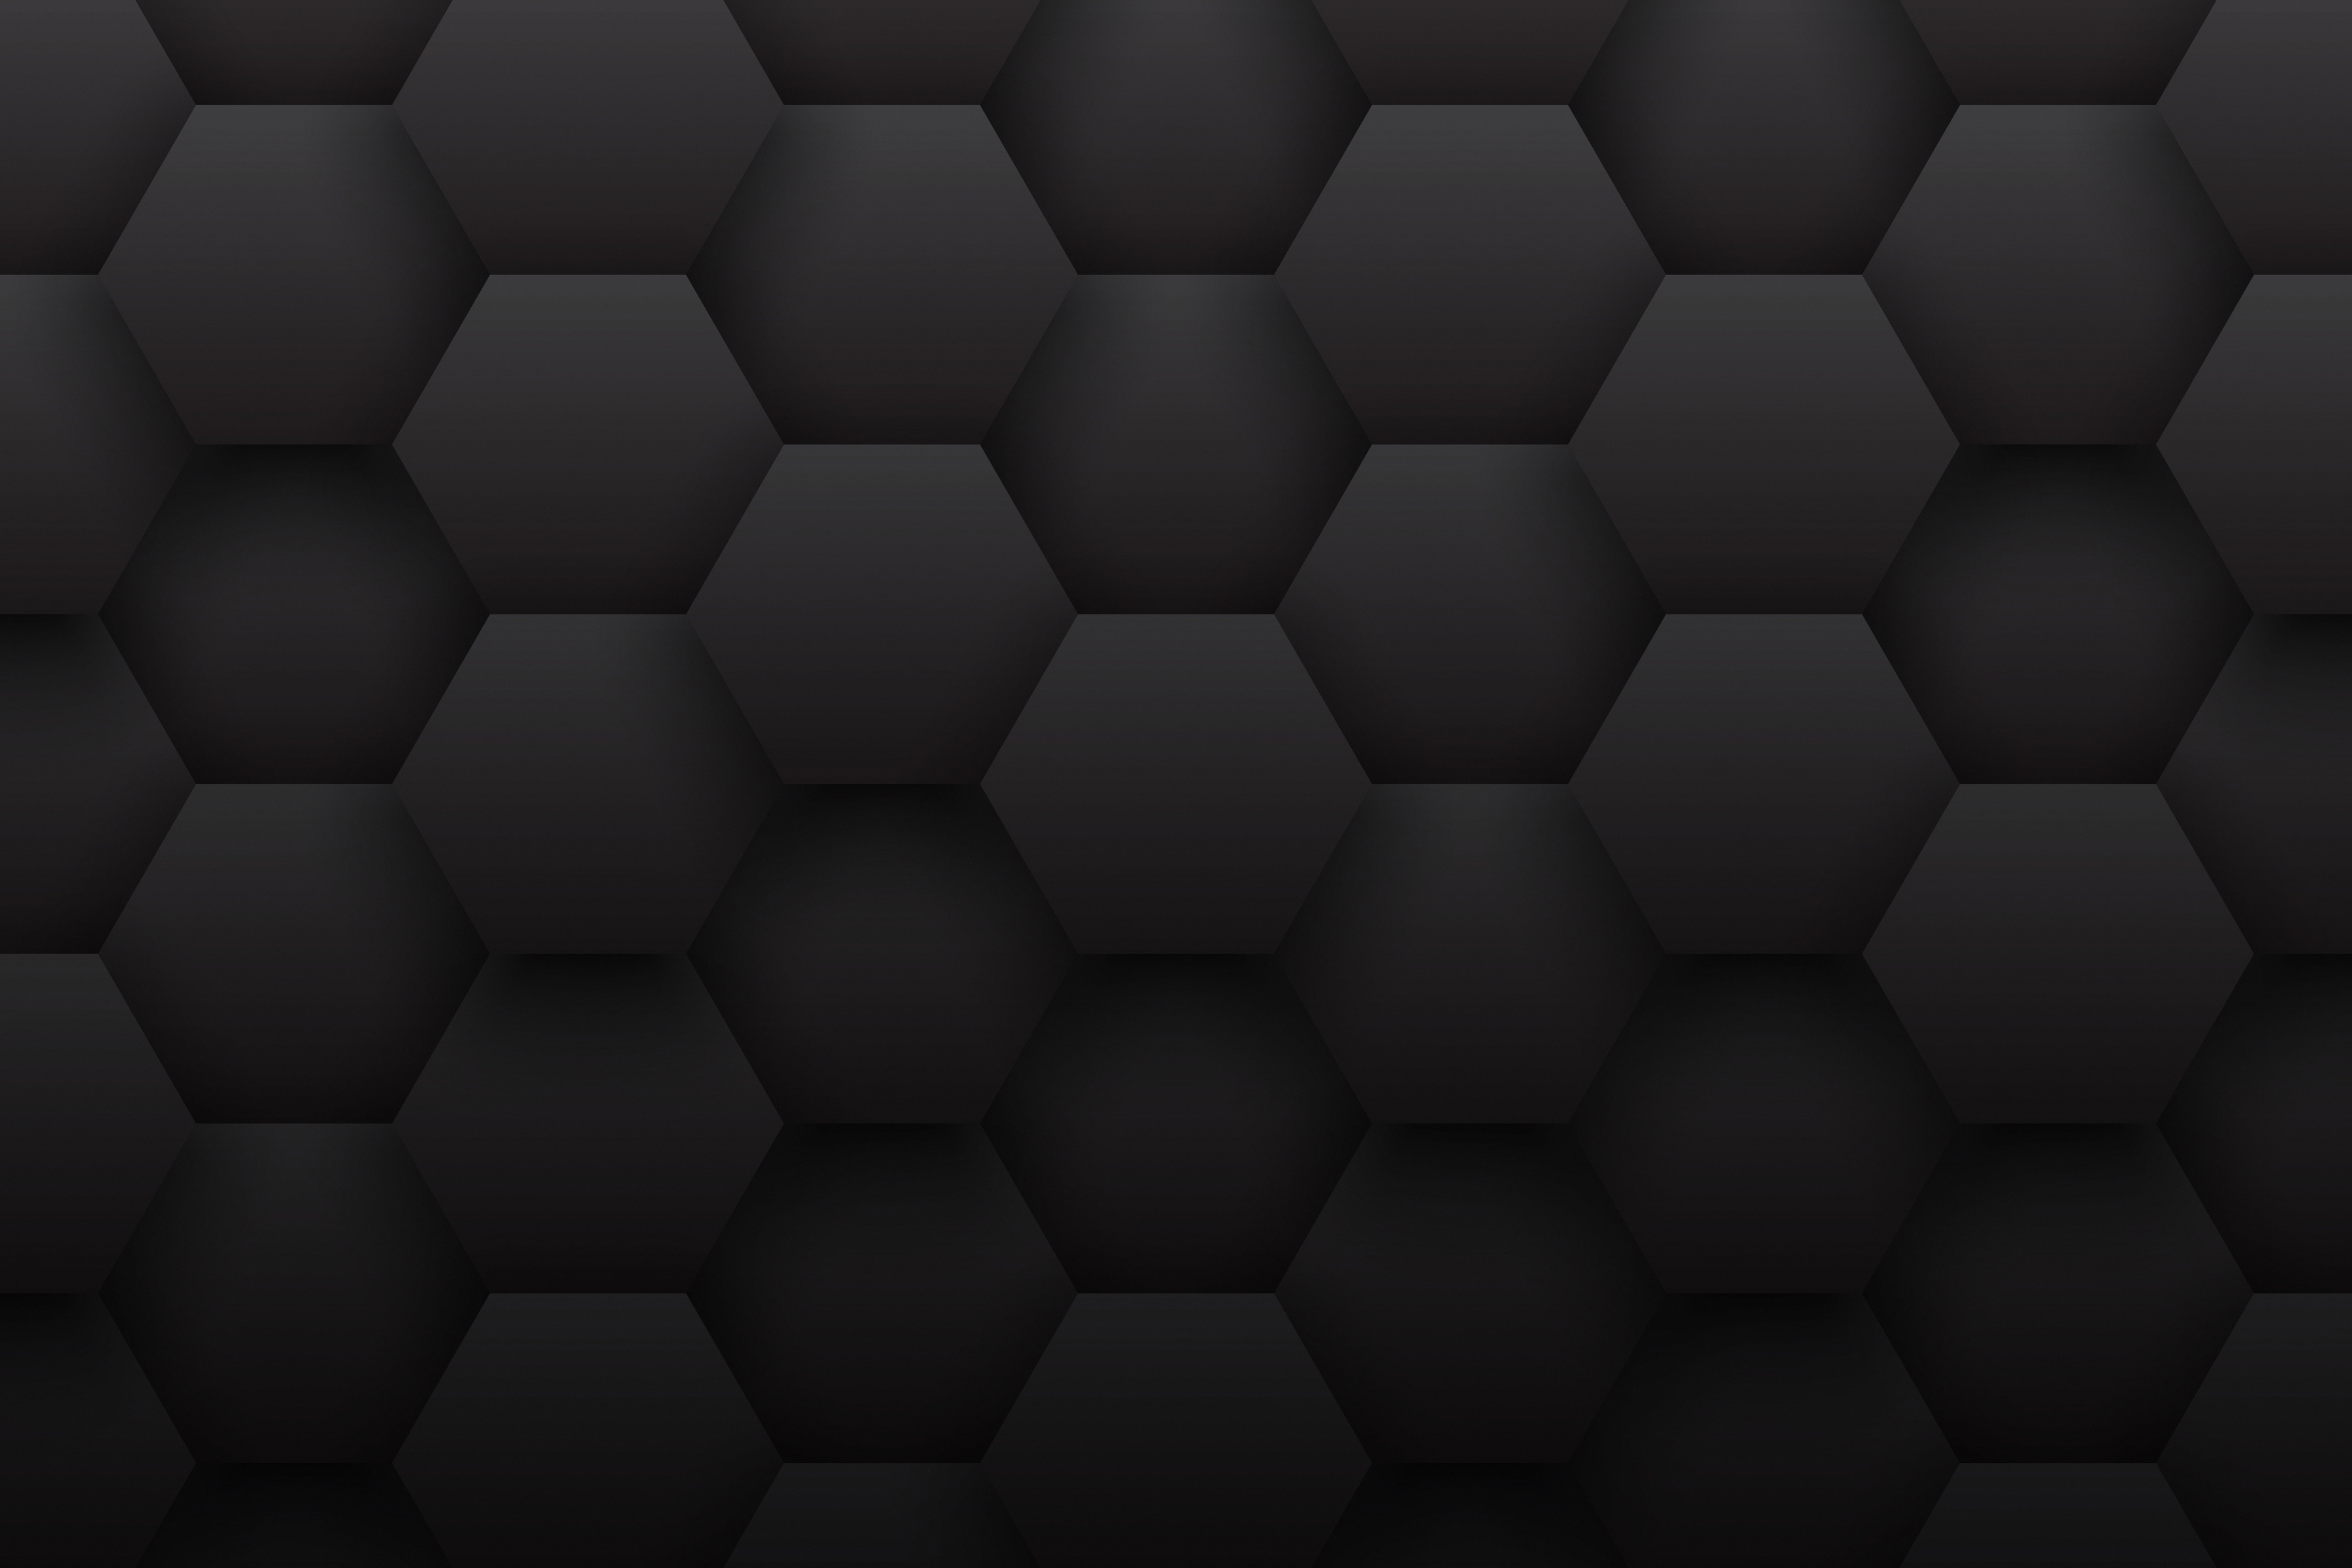 3D Hexagonal Pattern Minimalist Black Background